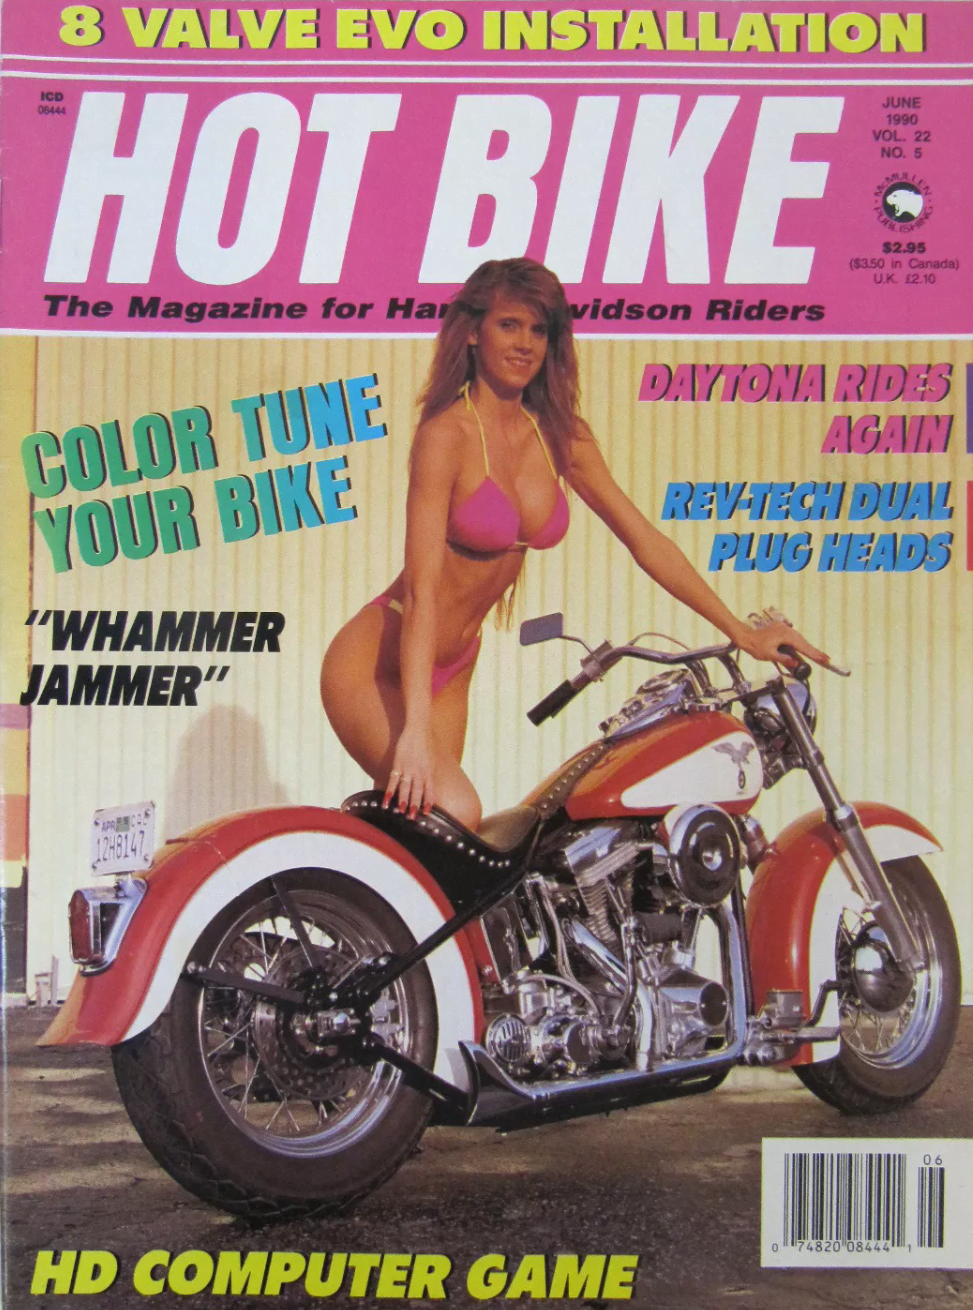 Hot Bike June 90 cover 